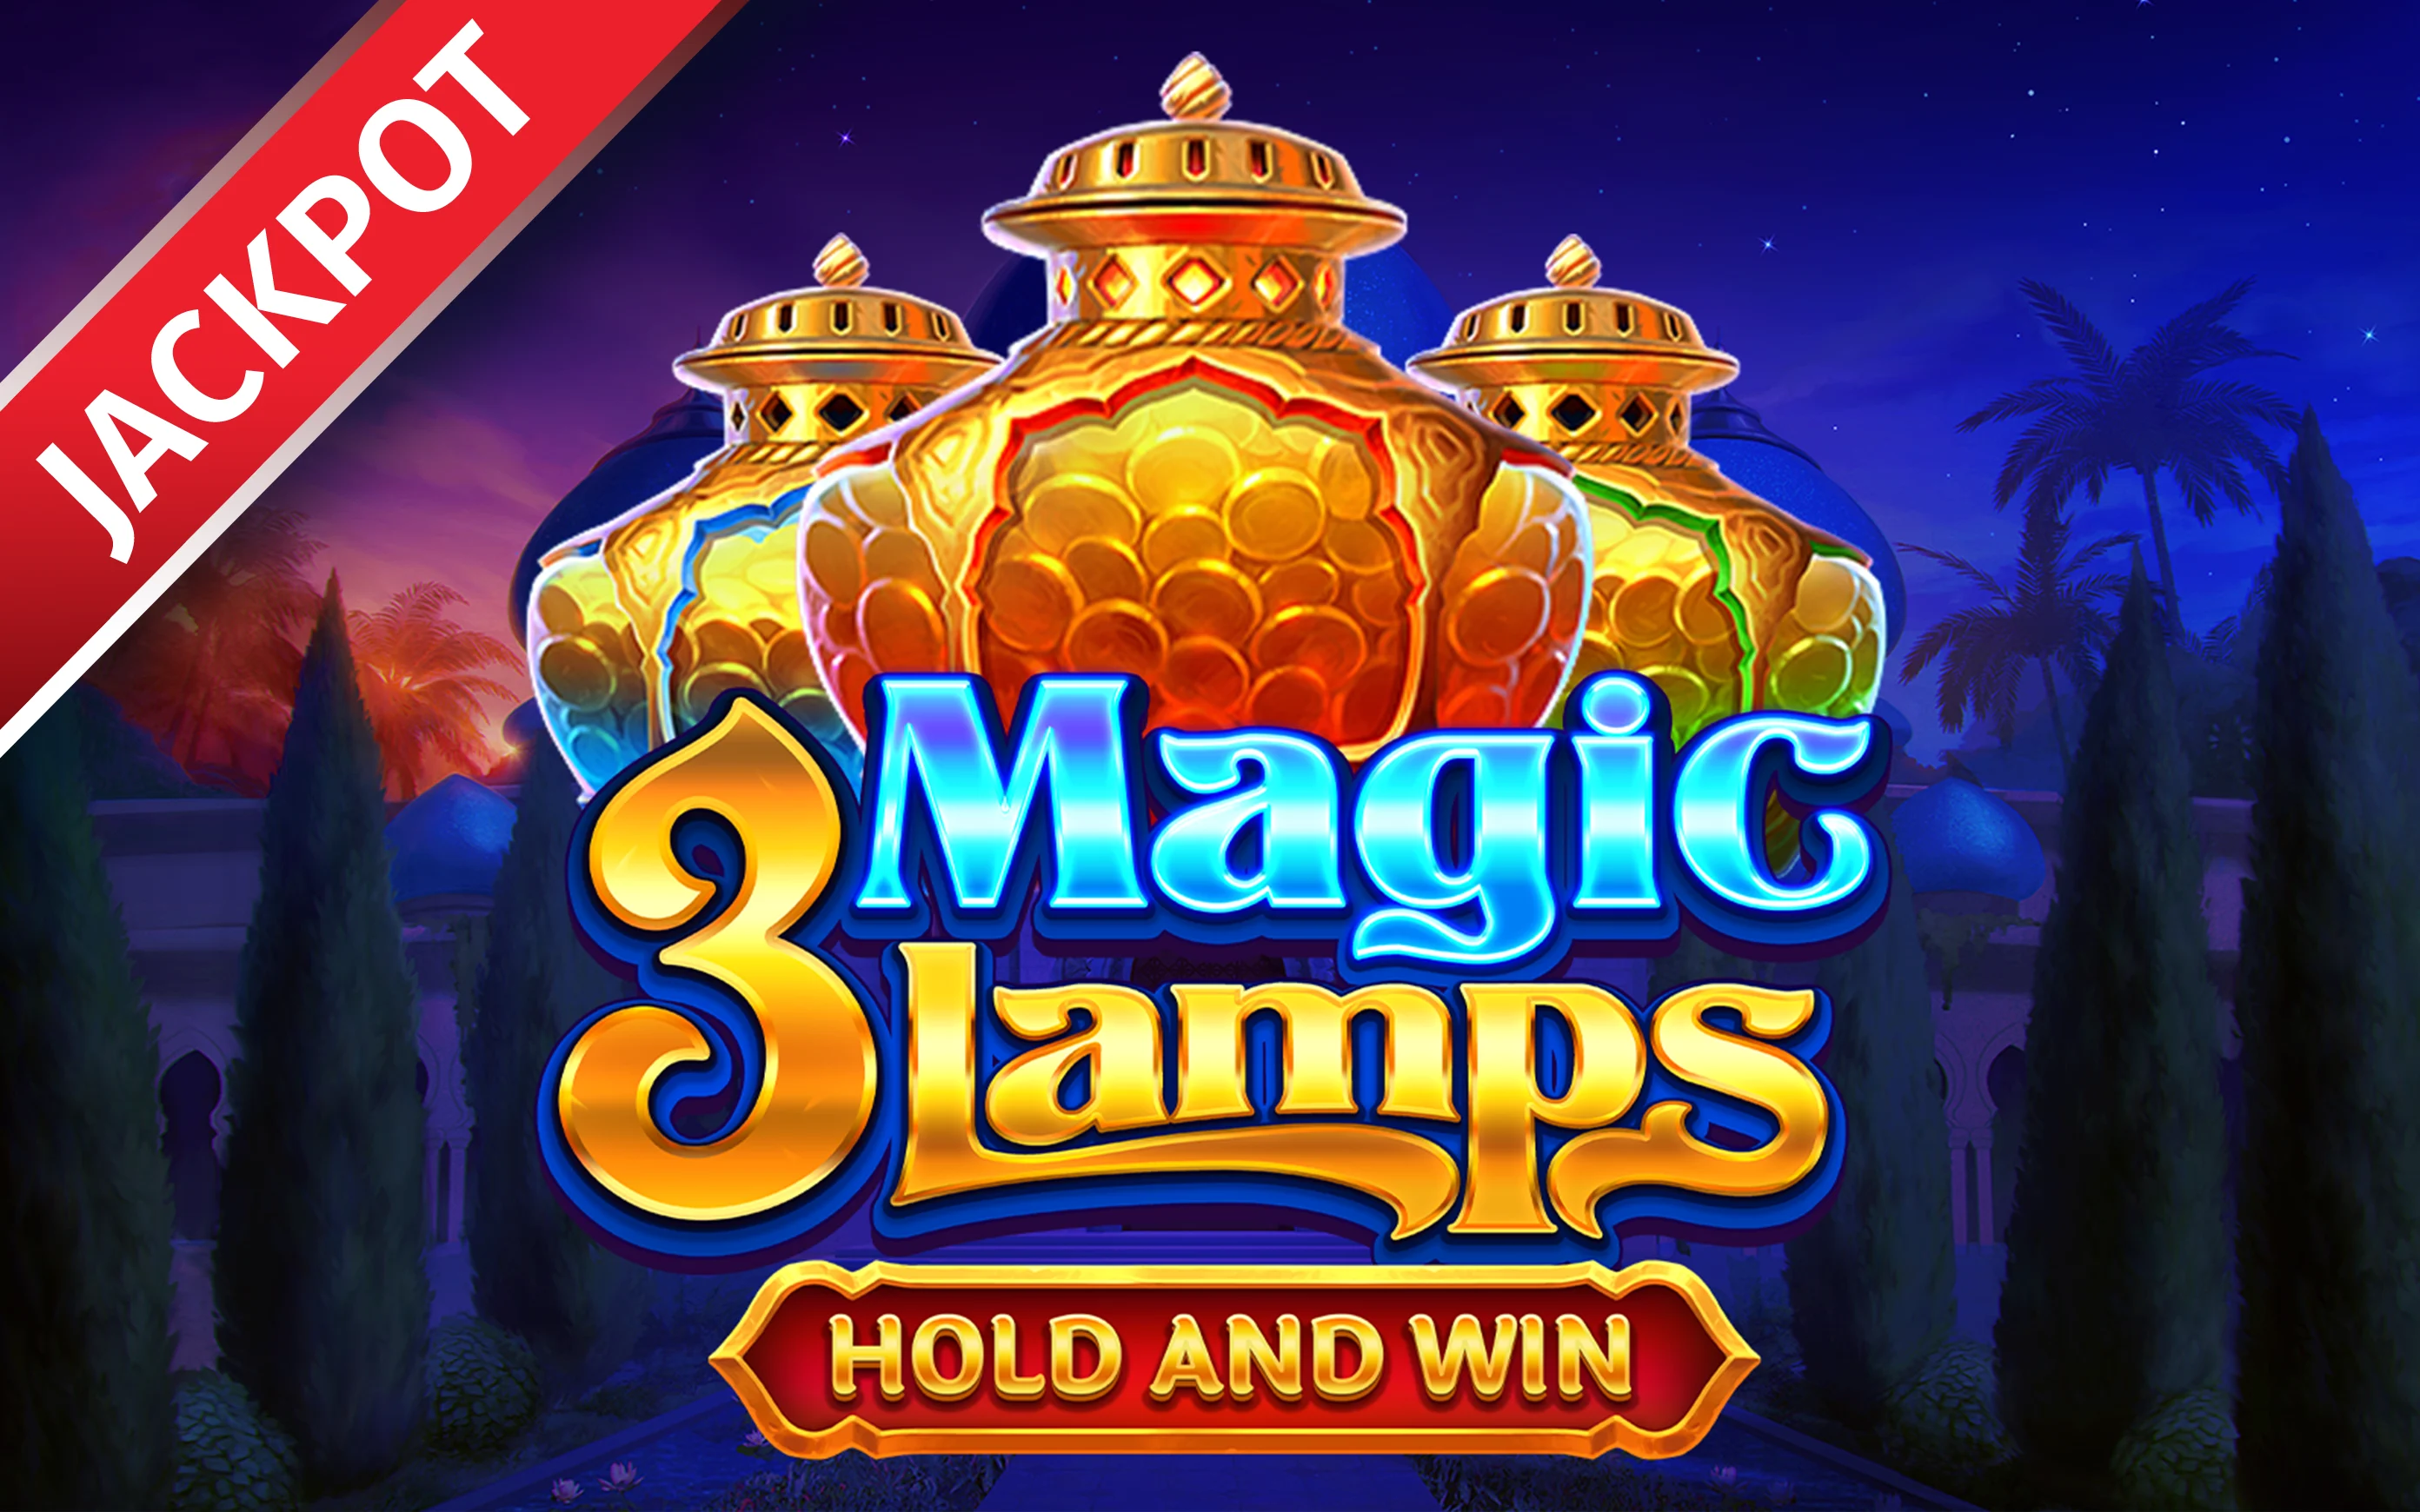 Starcasino.be online casino üzerinden 3 Magic Lamps: Hold and Win oynayın